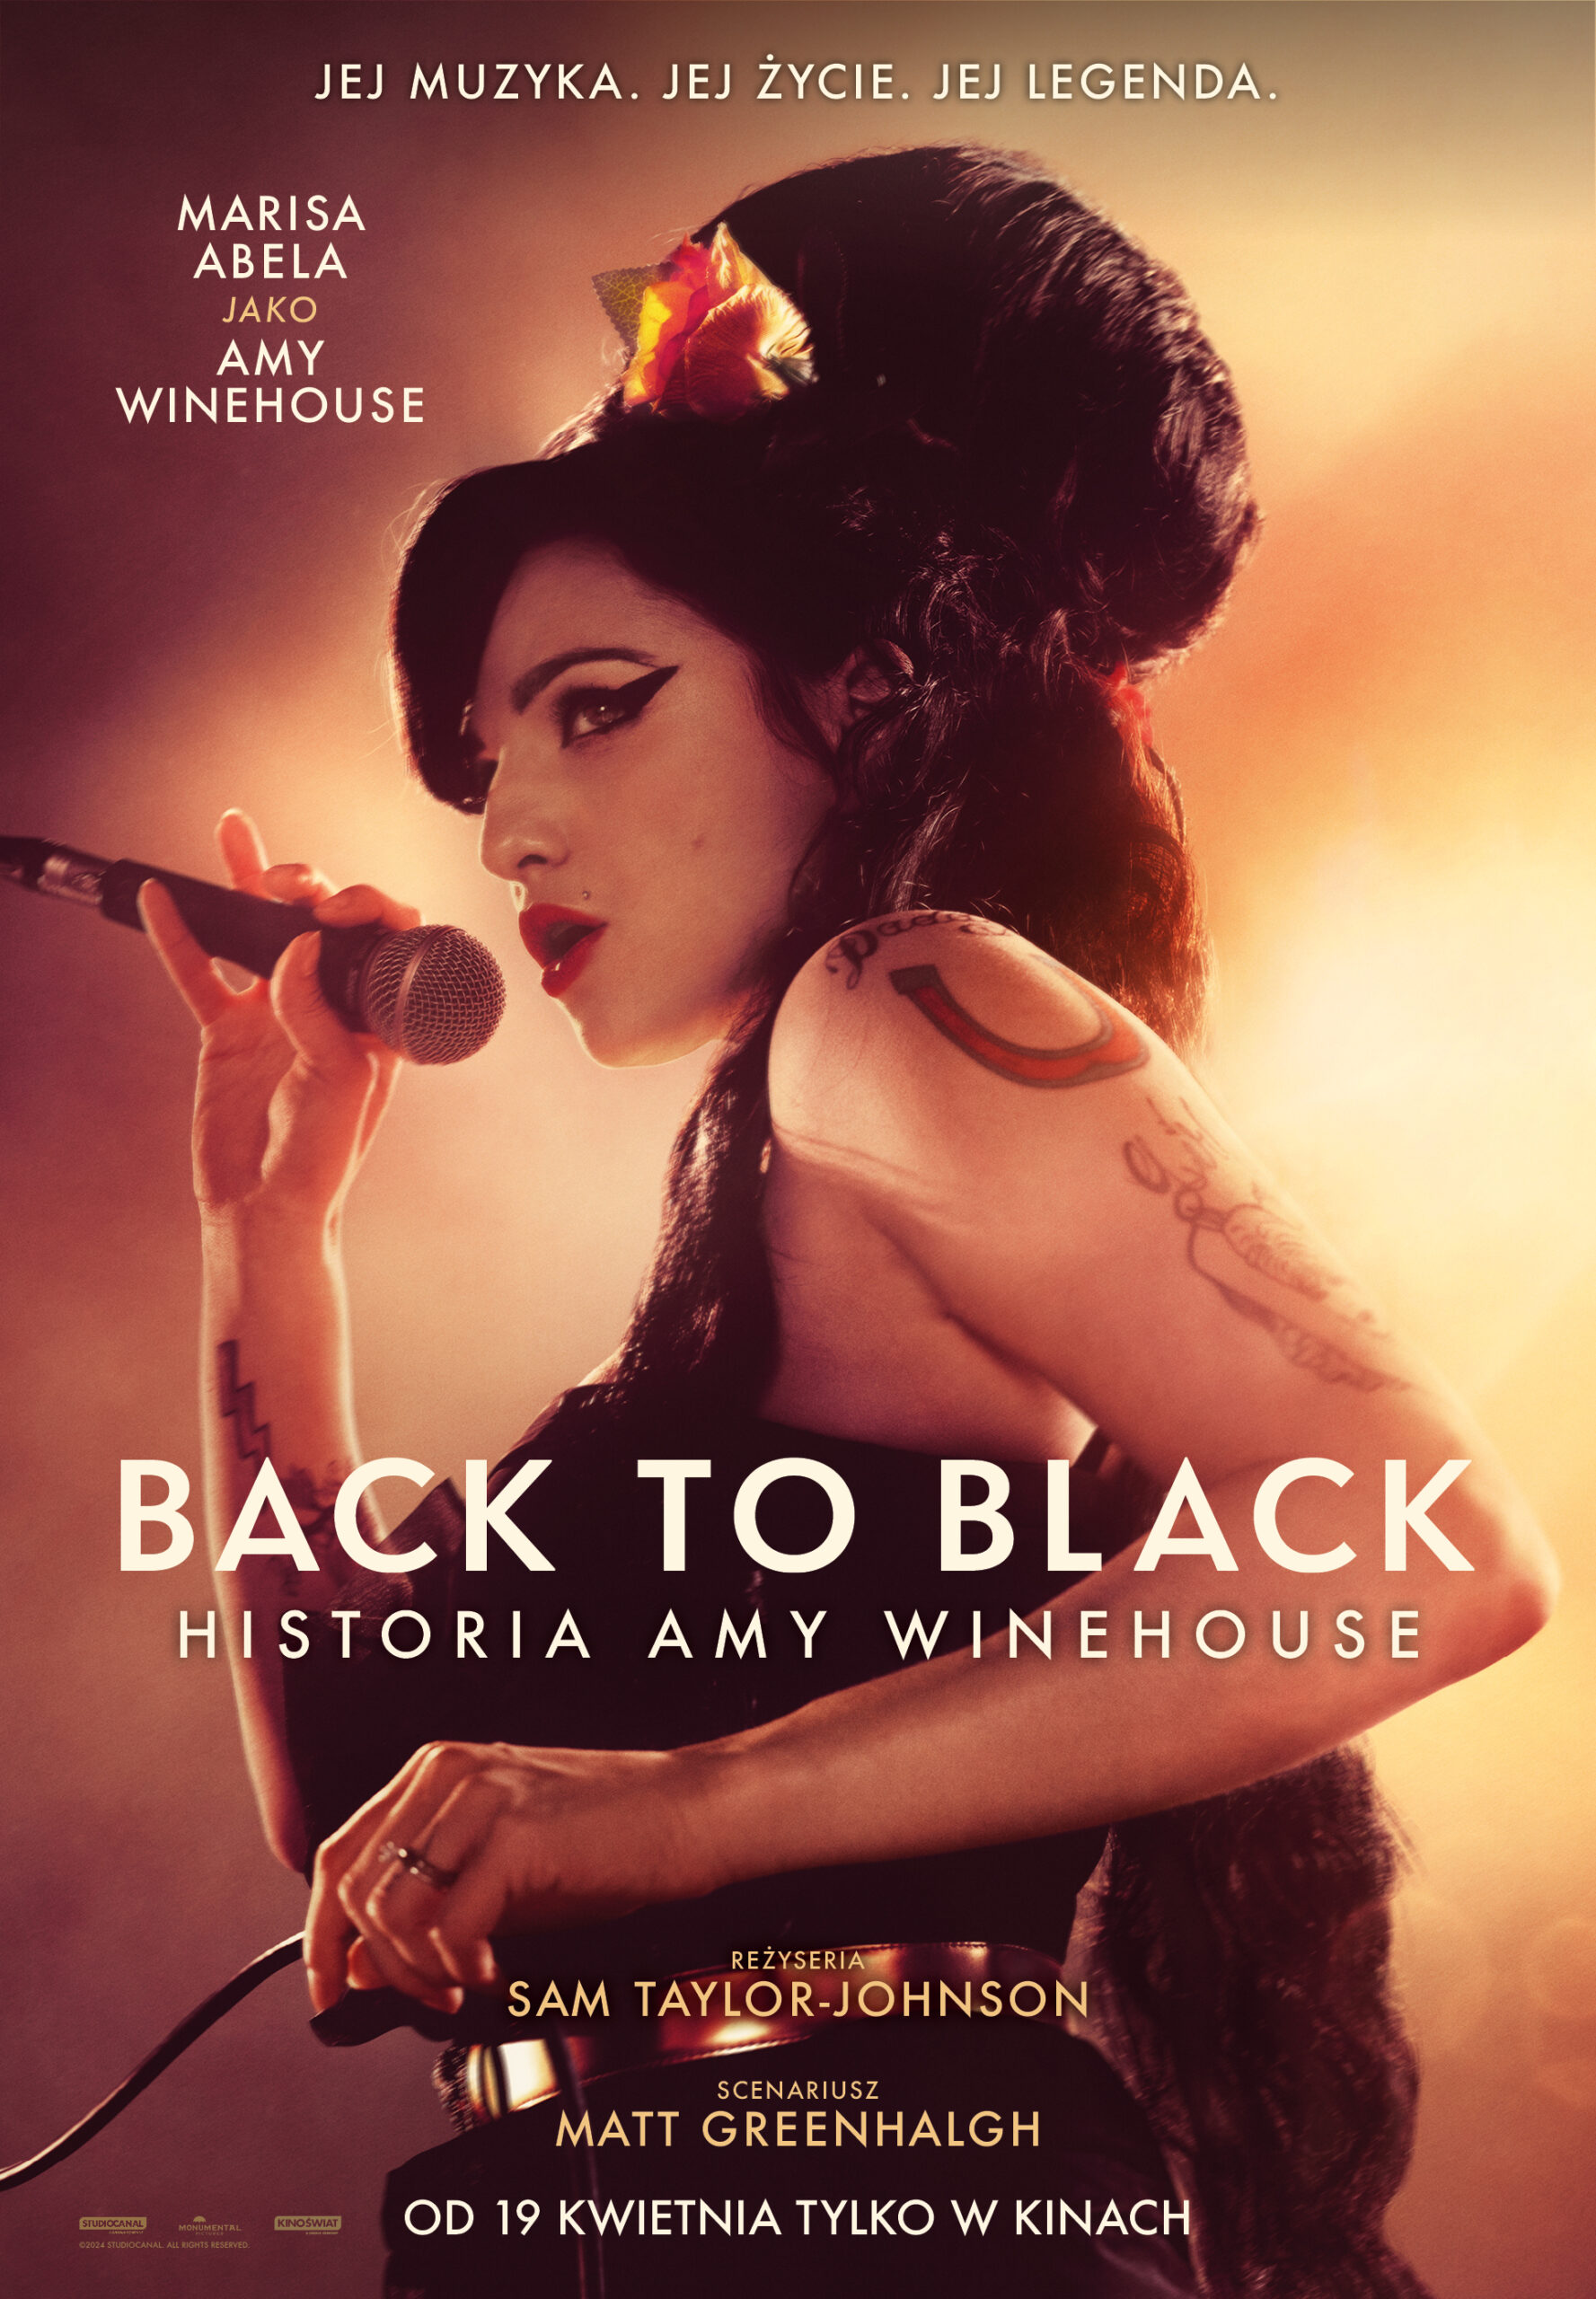 Back to Black. Historia Amy Winehouse/ PREMIERA OGÓLNOPOLSKA